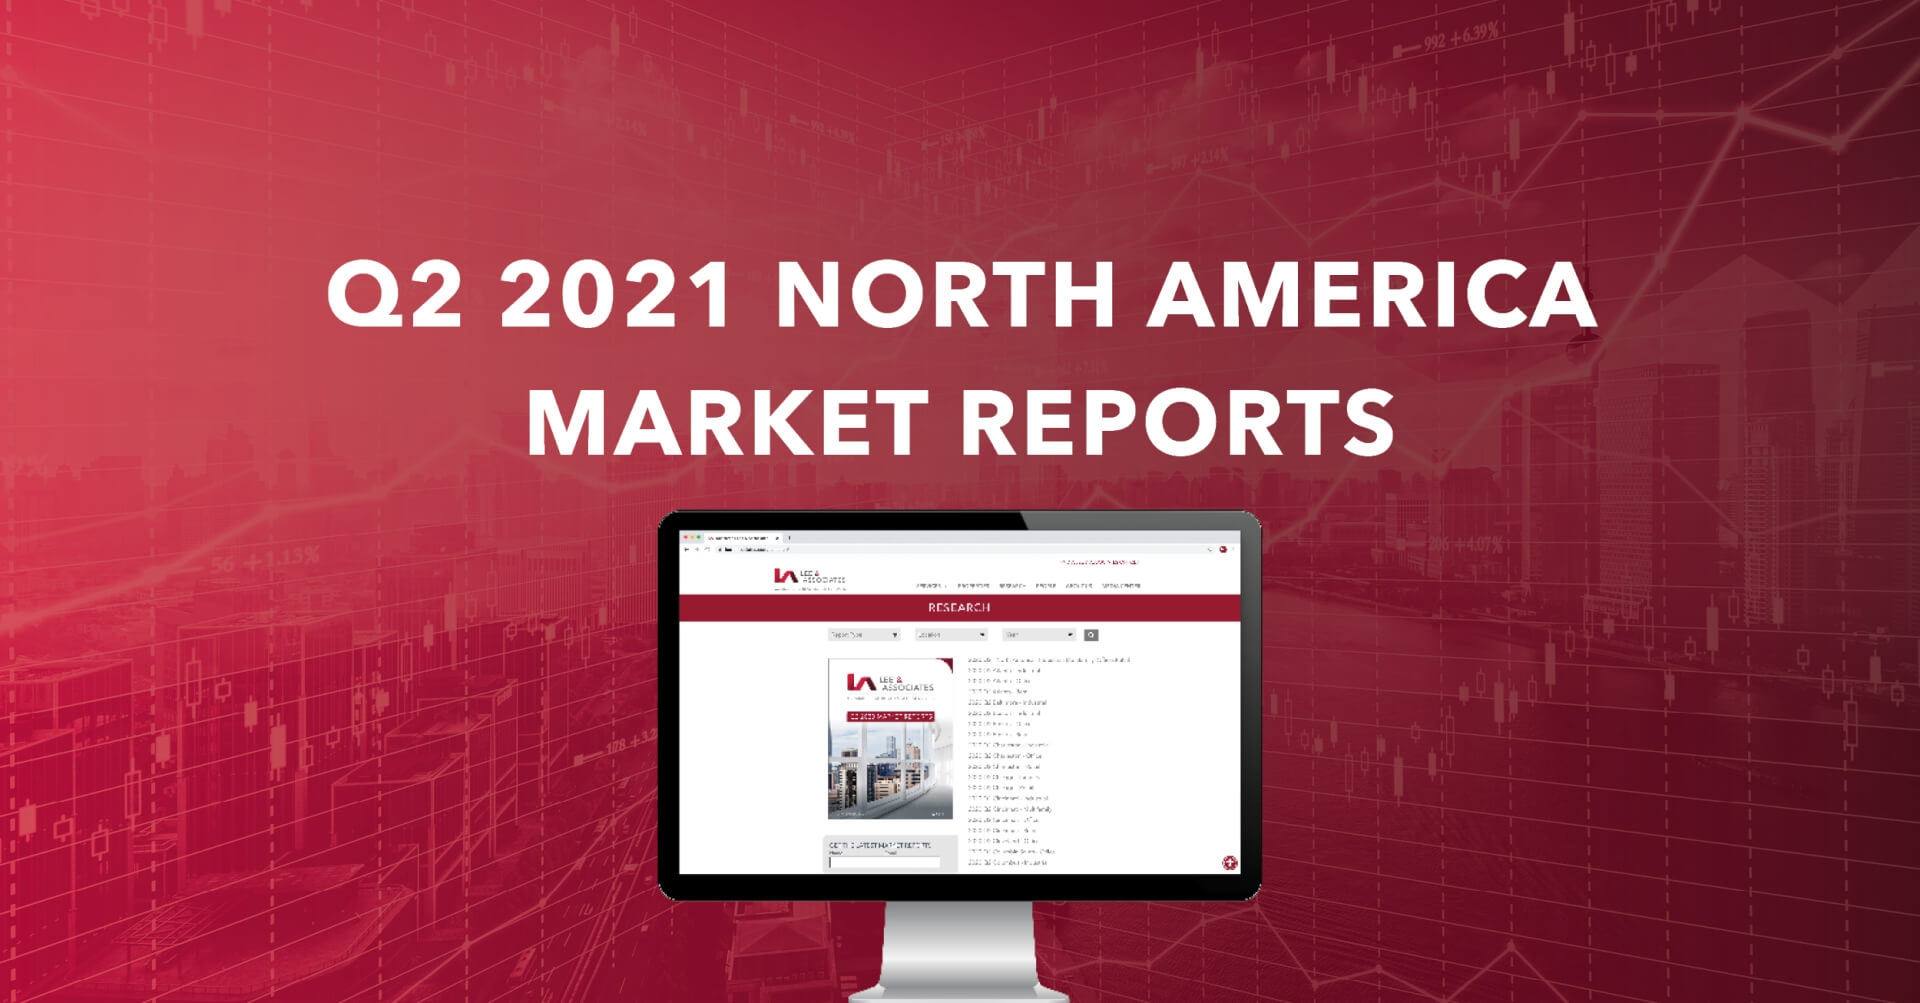 Q2 2021 North America Market Reports Released